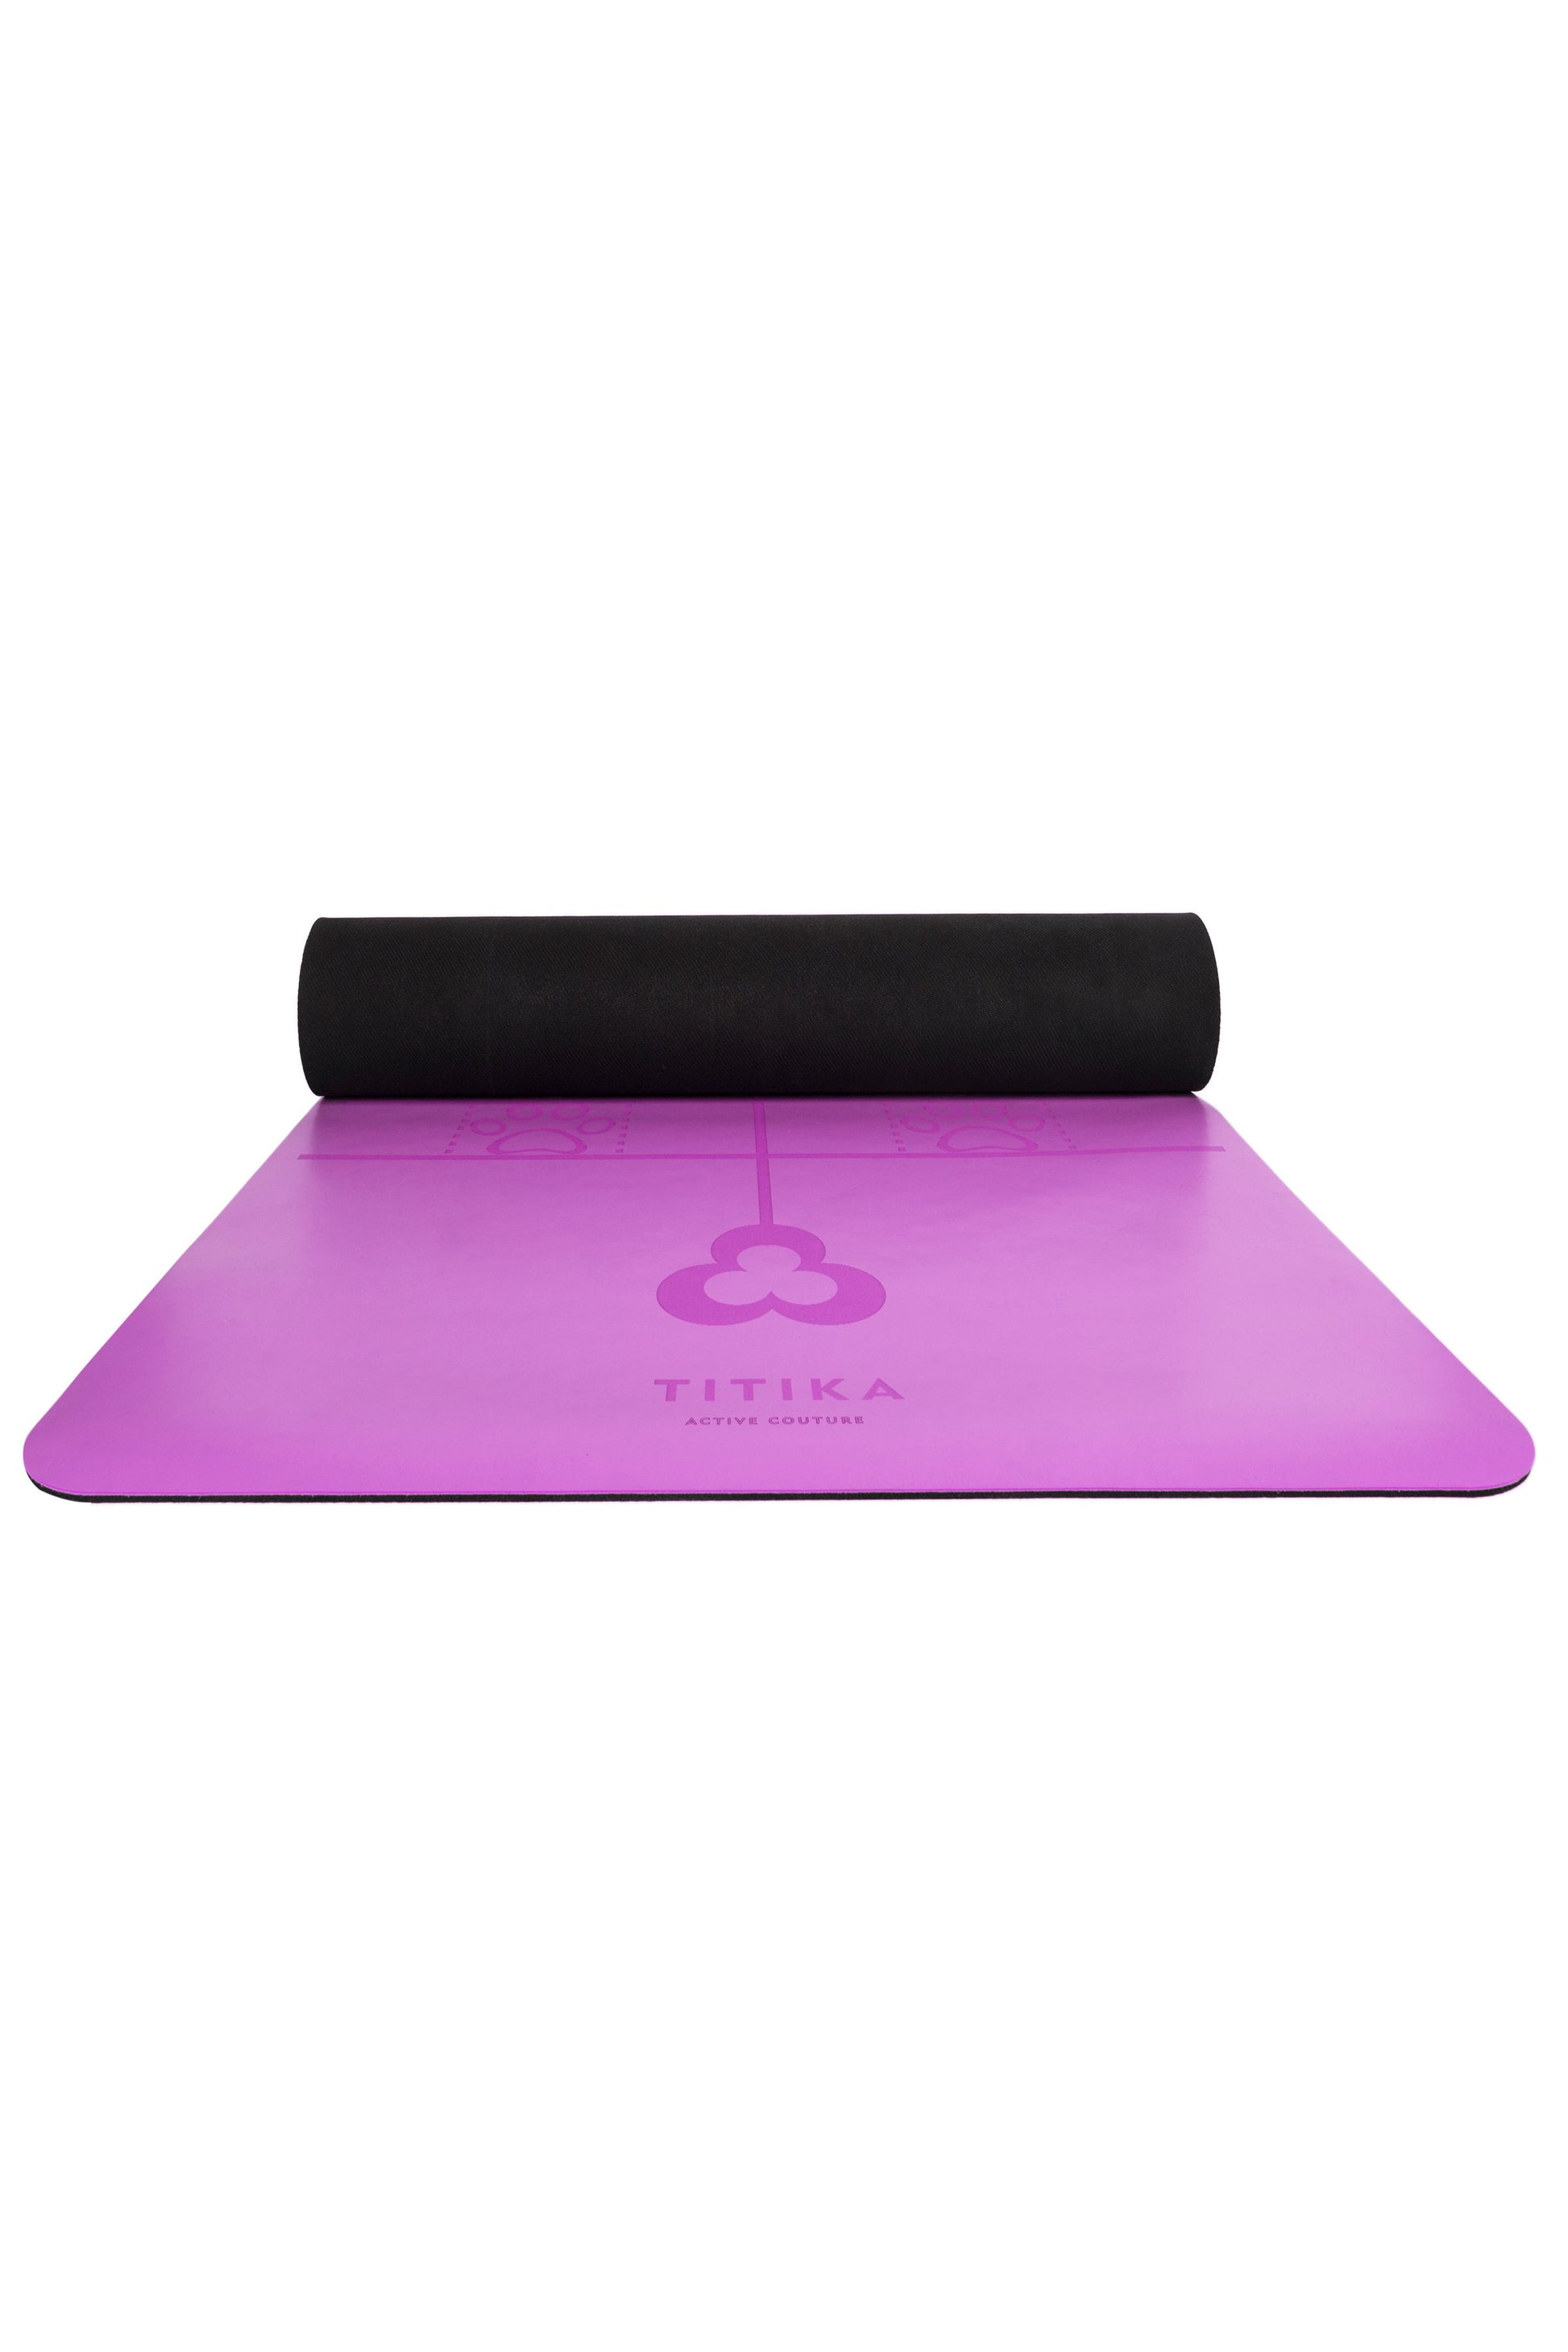 4.5mm Yoga Mat - Titika Active Couture™ (Hong Kong)